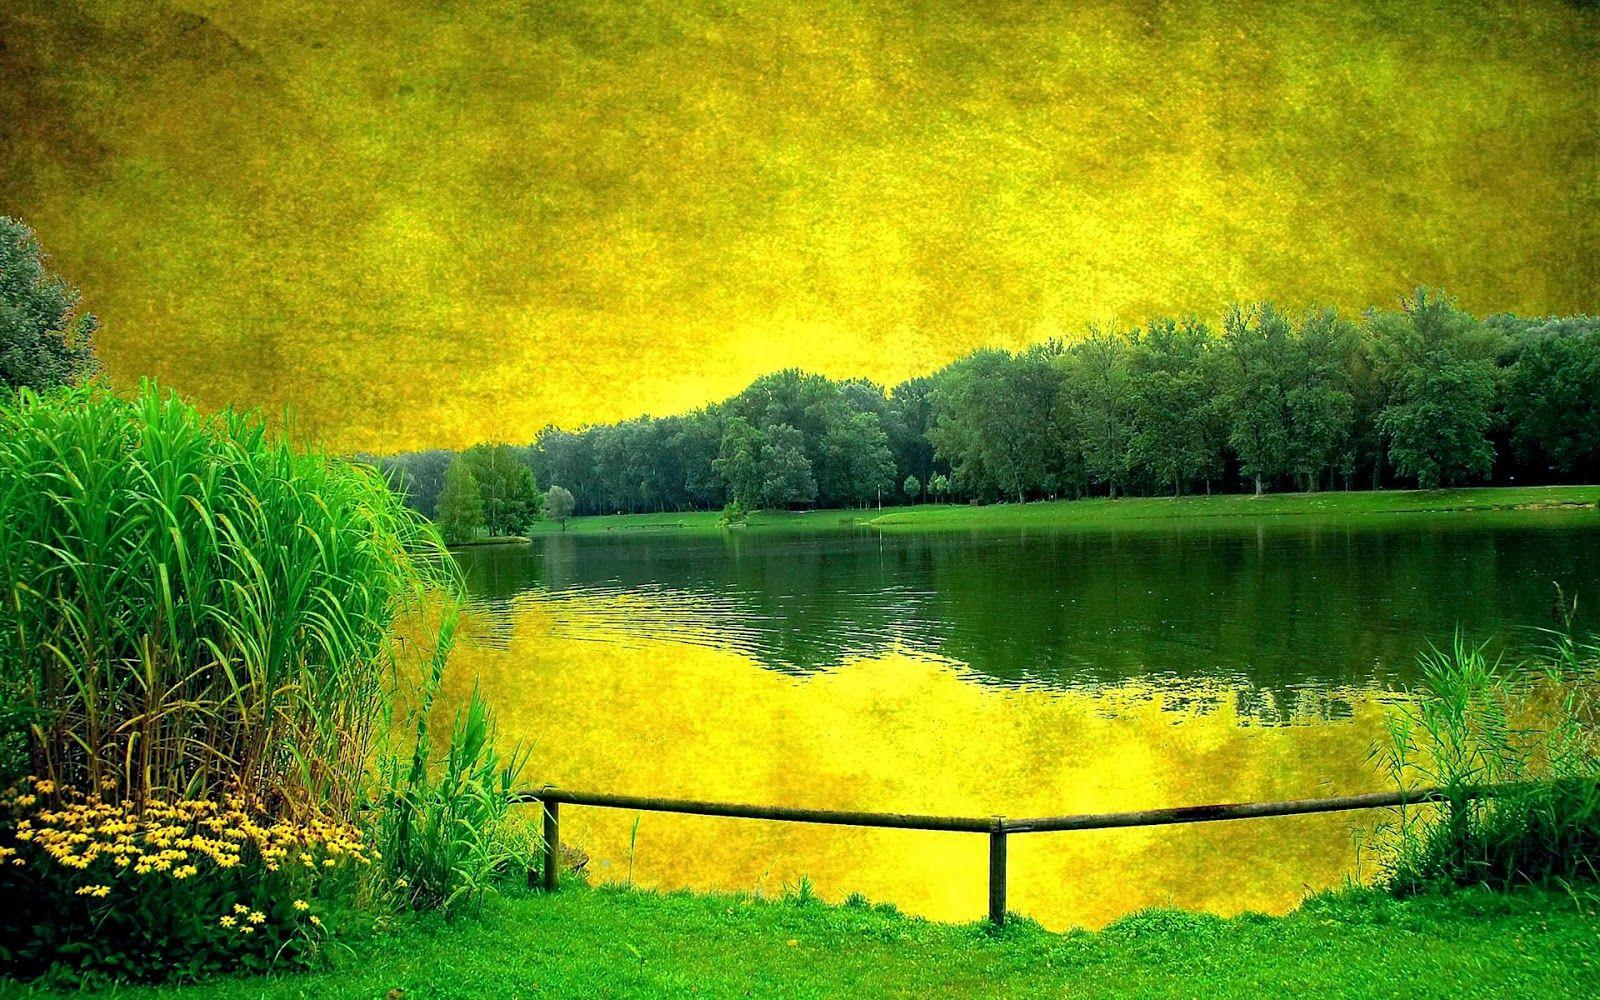 Nature Image Wallpaper: Most Beautiful Amazing Green Nature Place Desktop Background